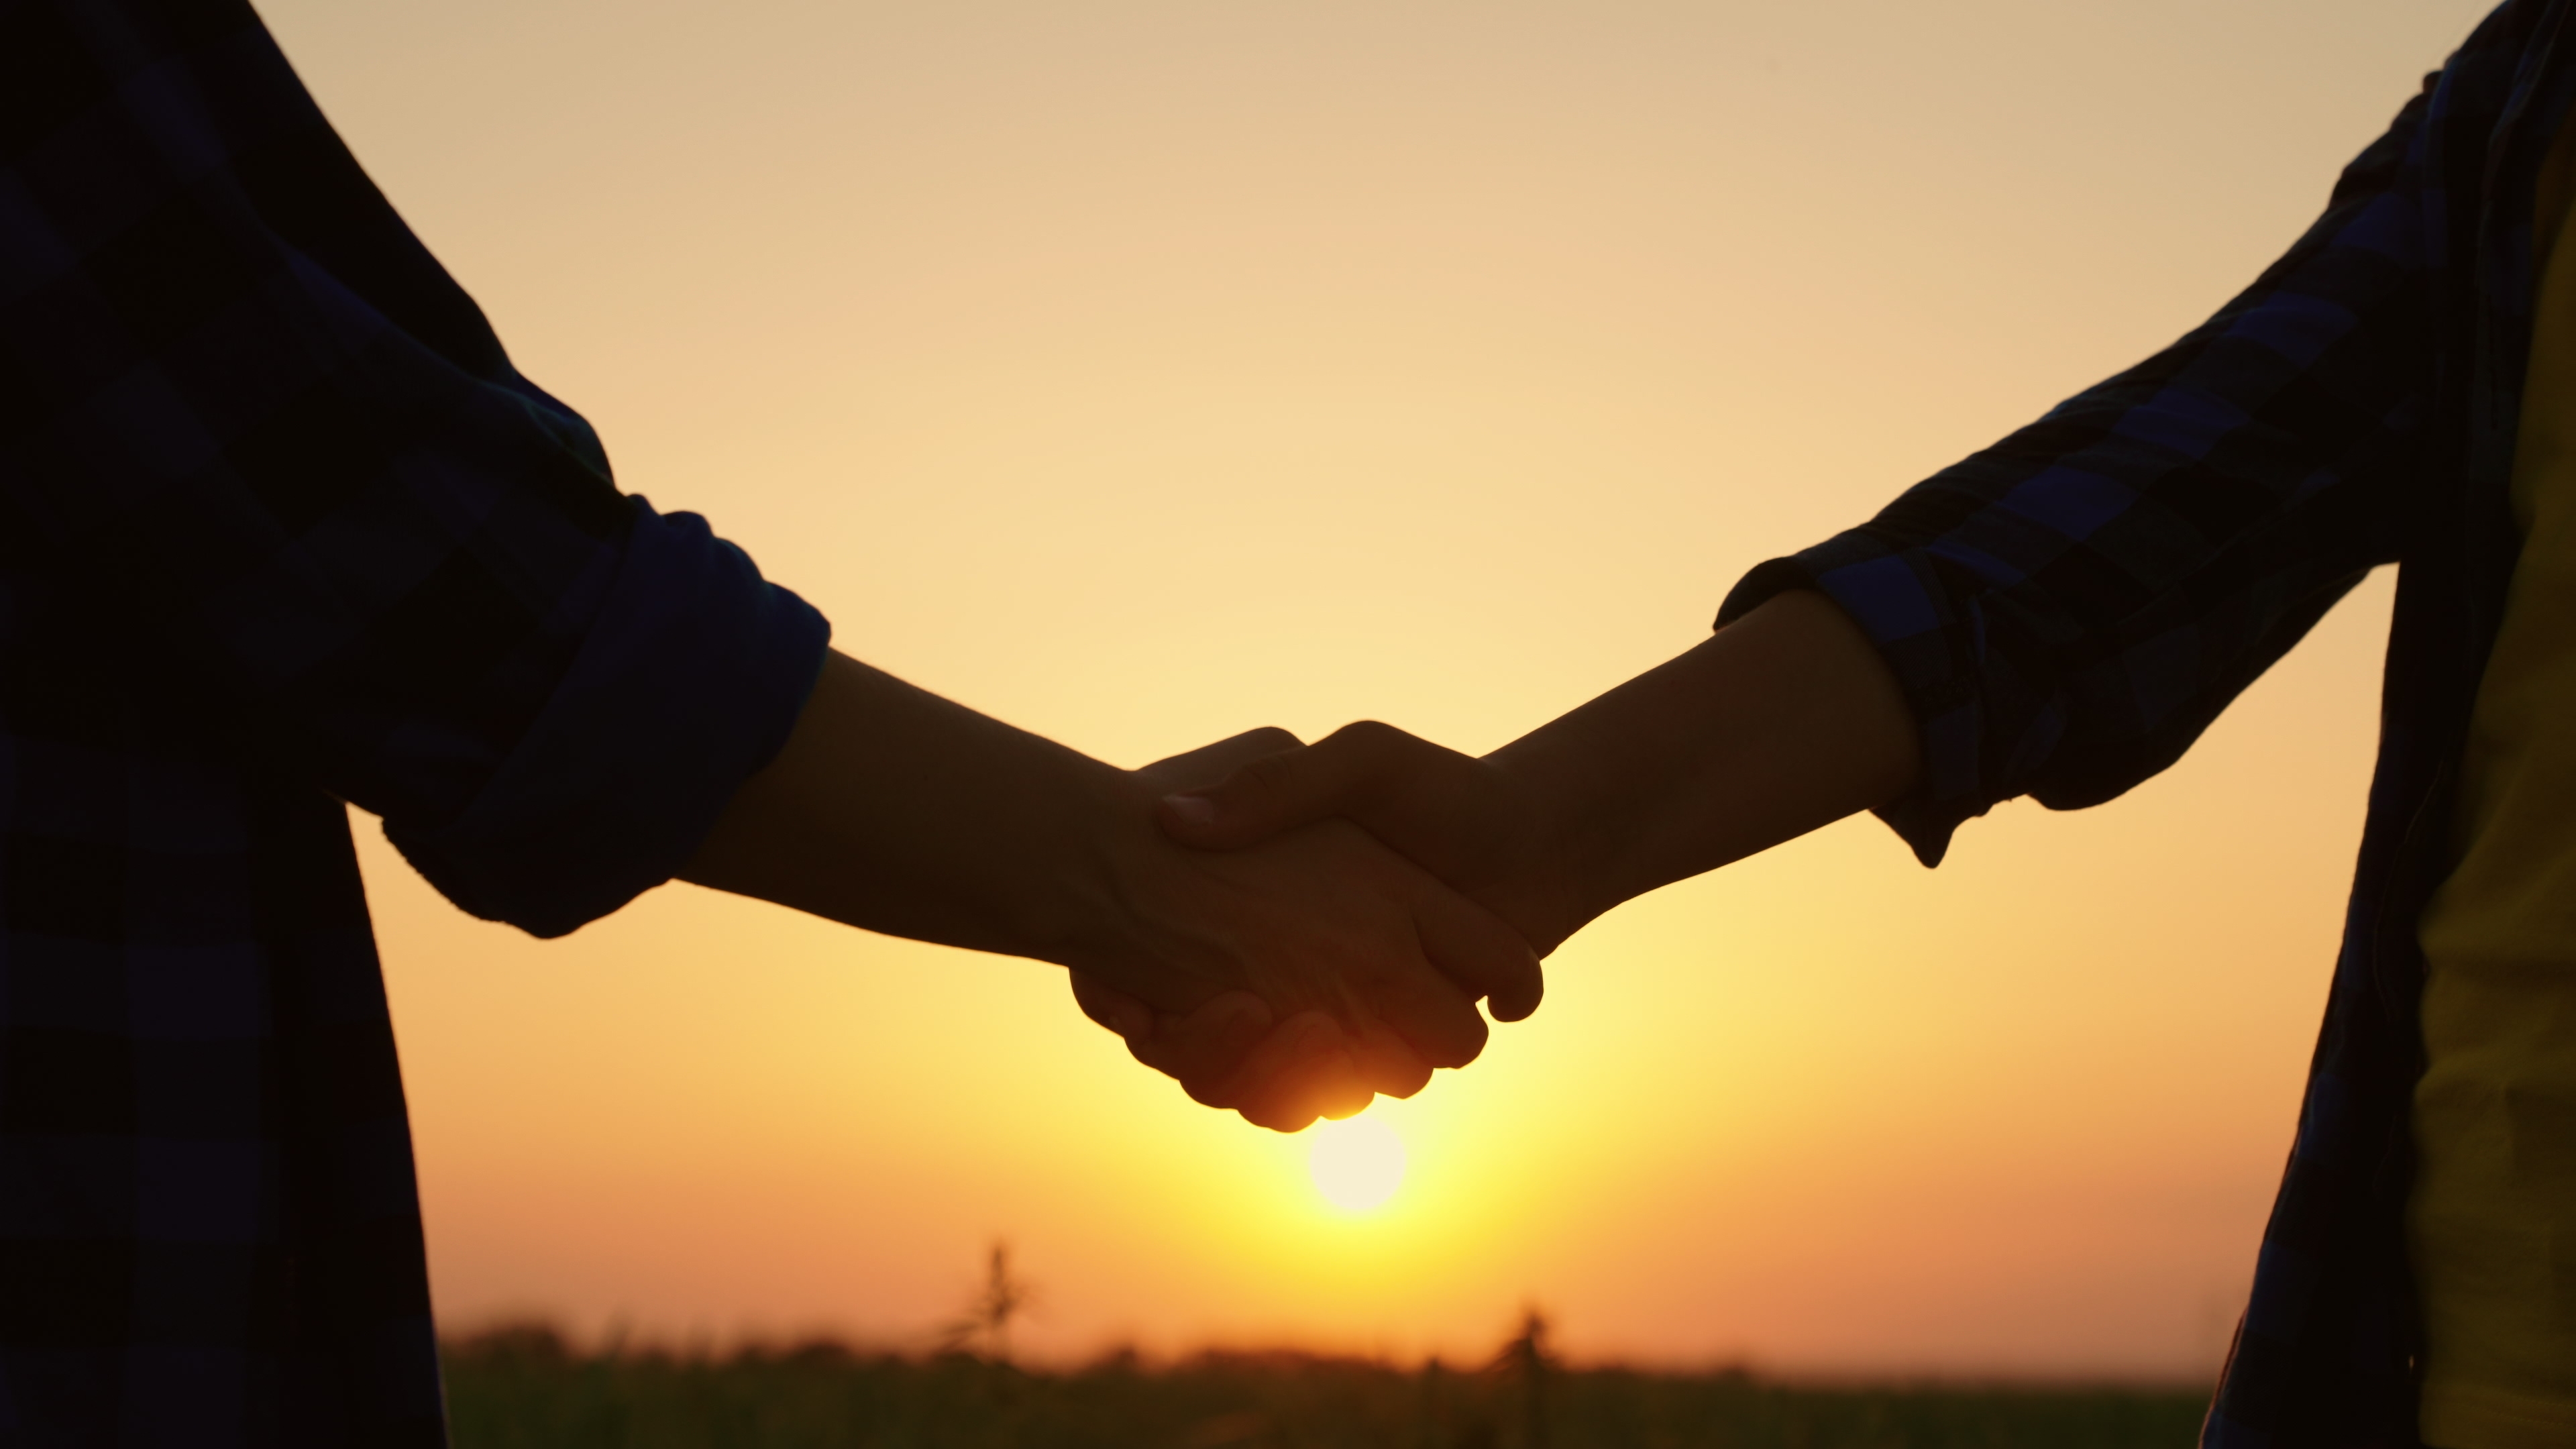 Business people shake hands | Source: Shutterstock